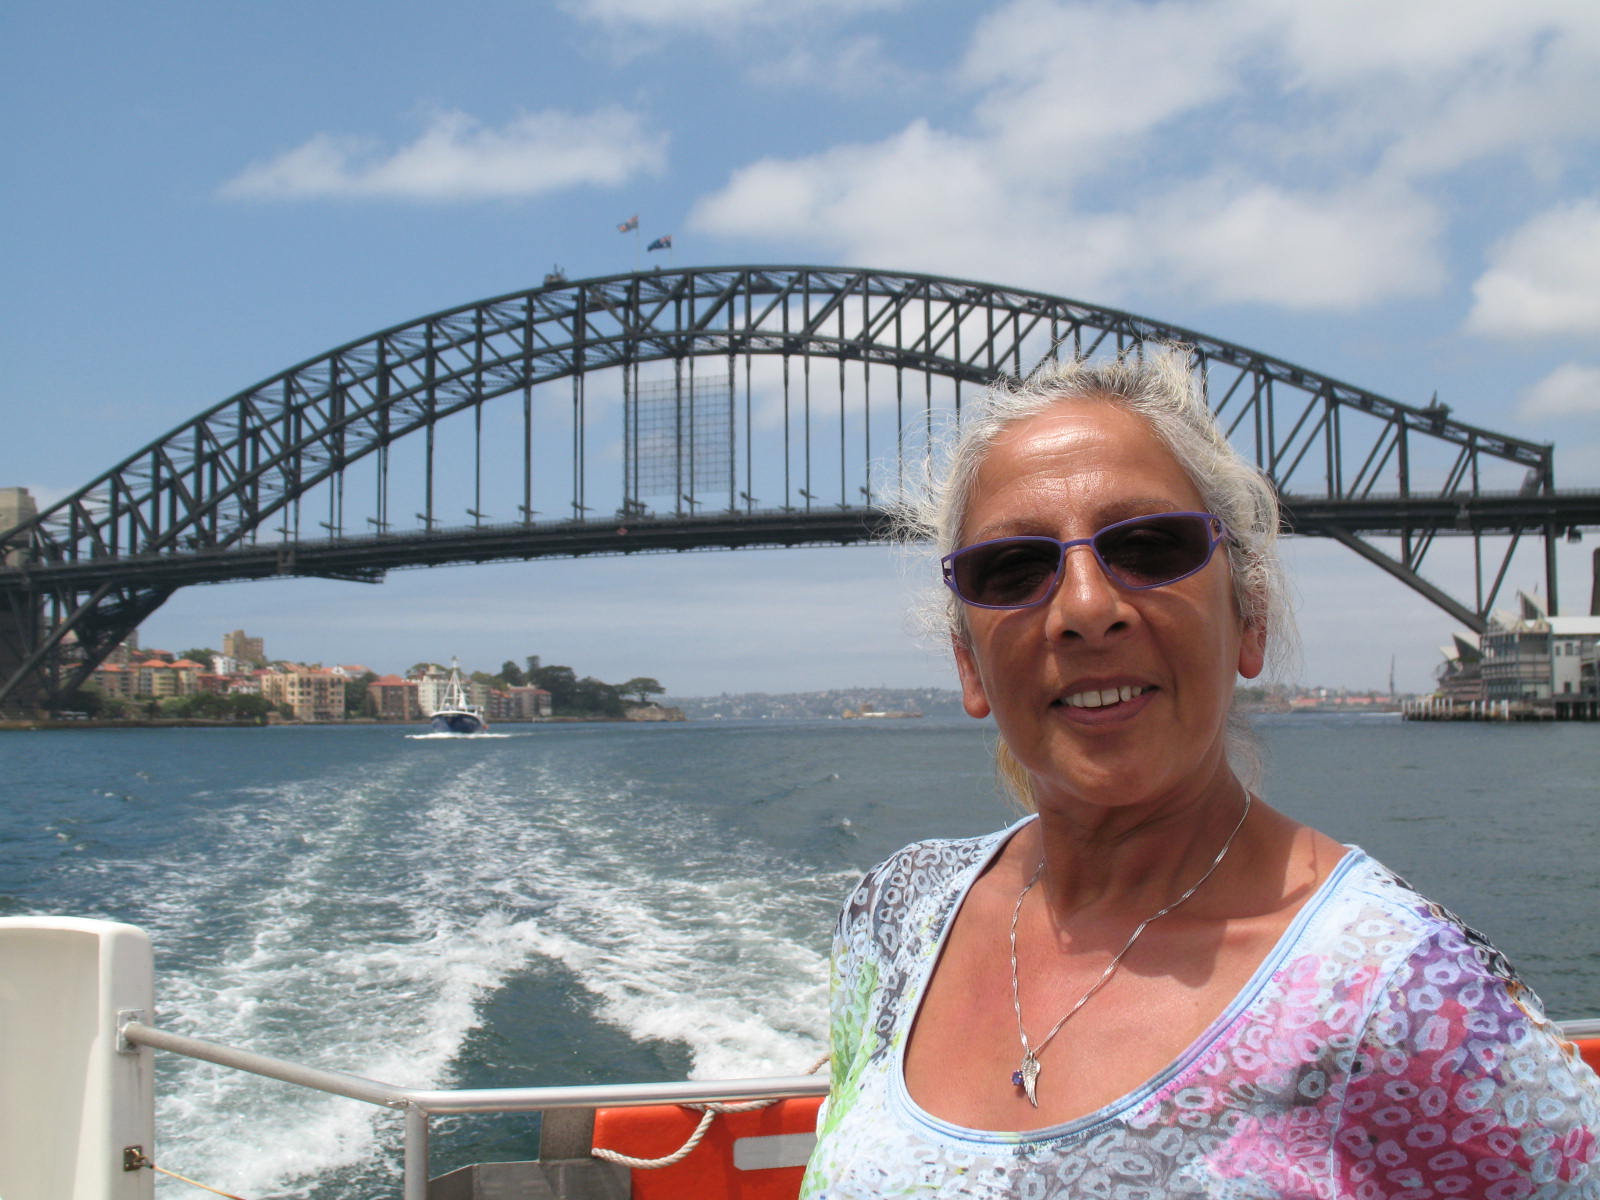 Sydney harbour bridge - what else! Linda - who else!